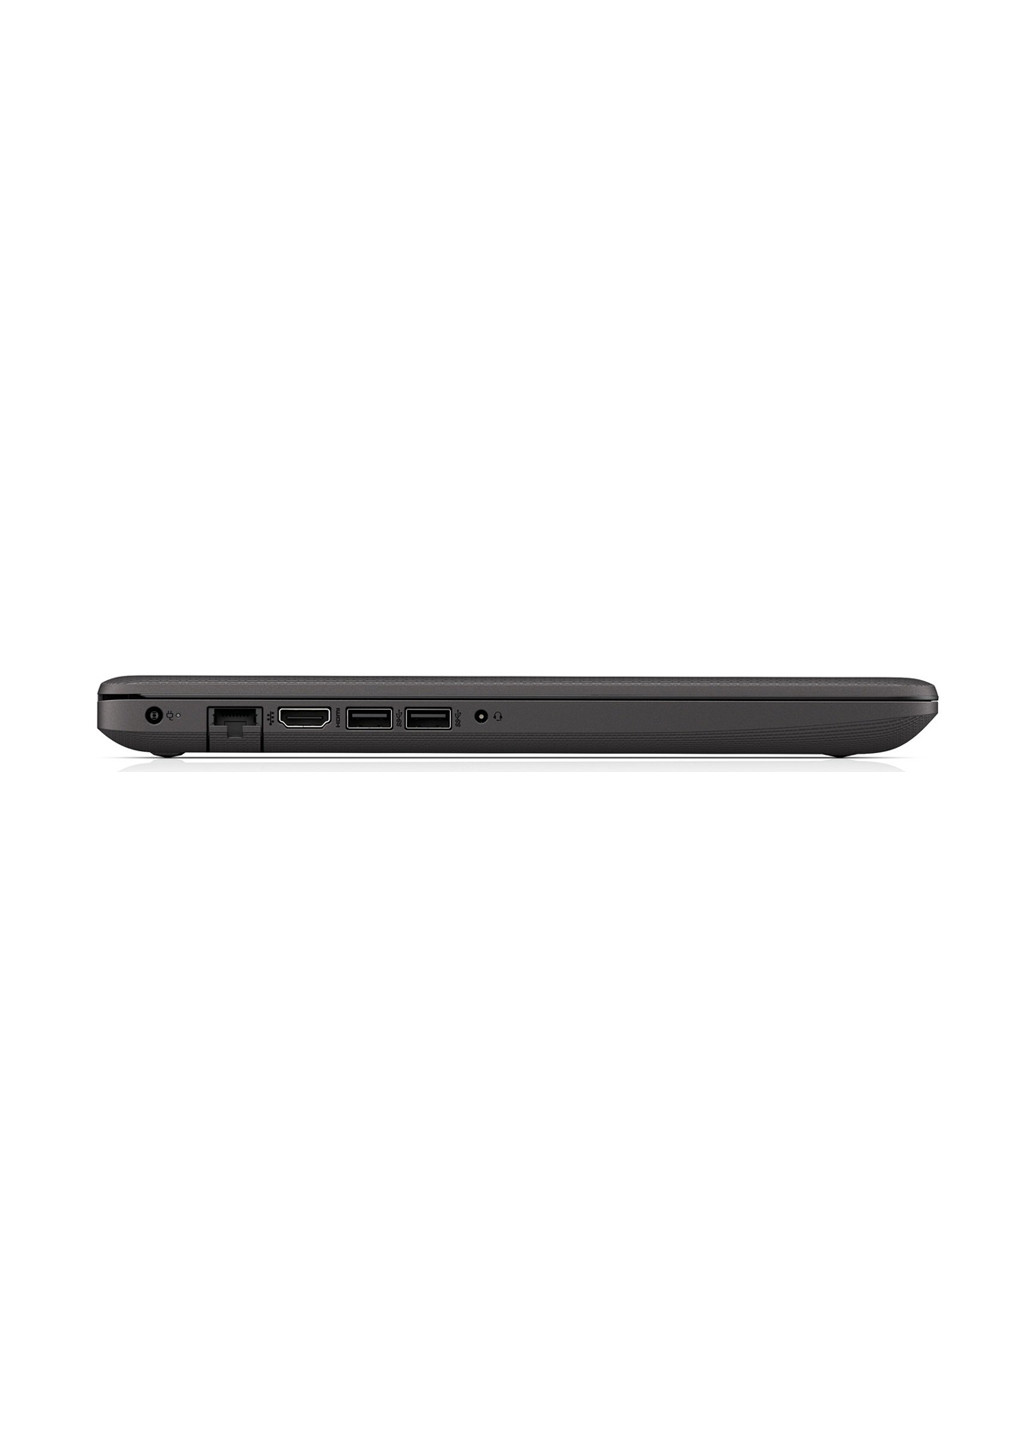 Ноутбук HP 250 g7 (6bp26ea) dark silver (136402422)